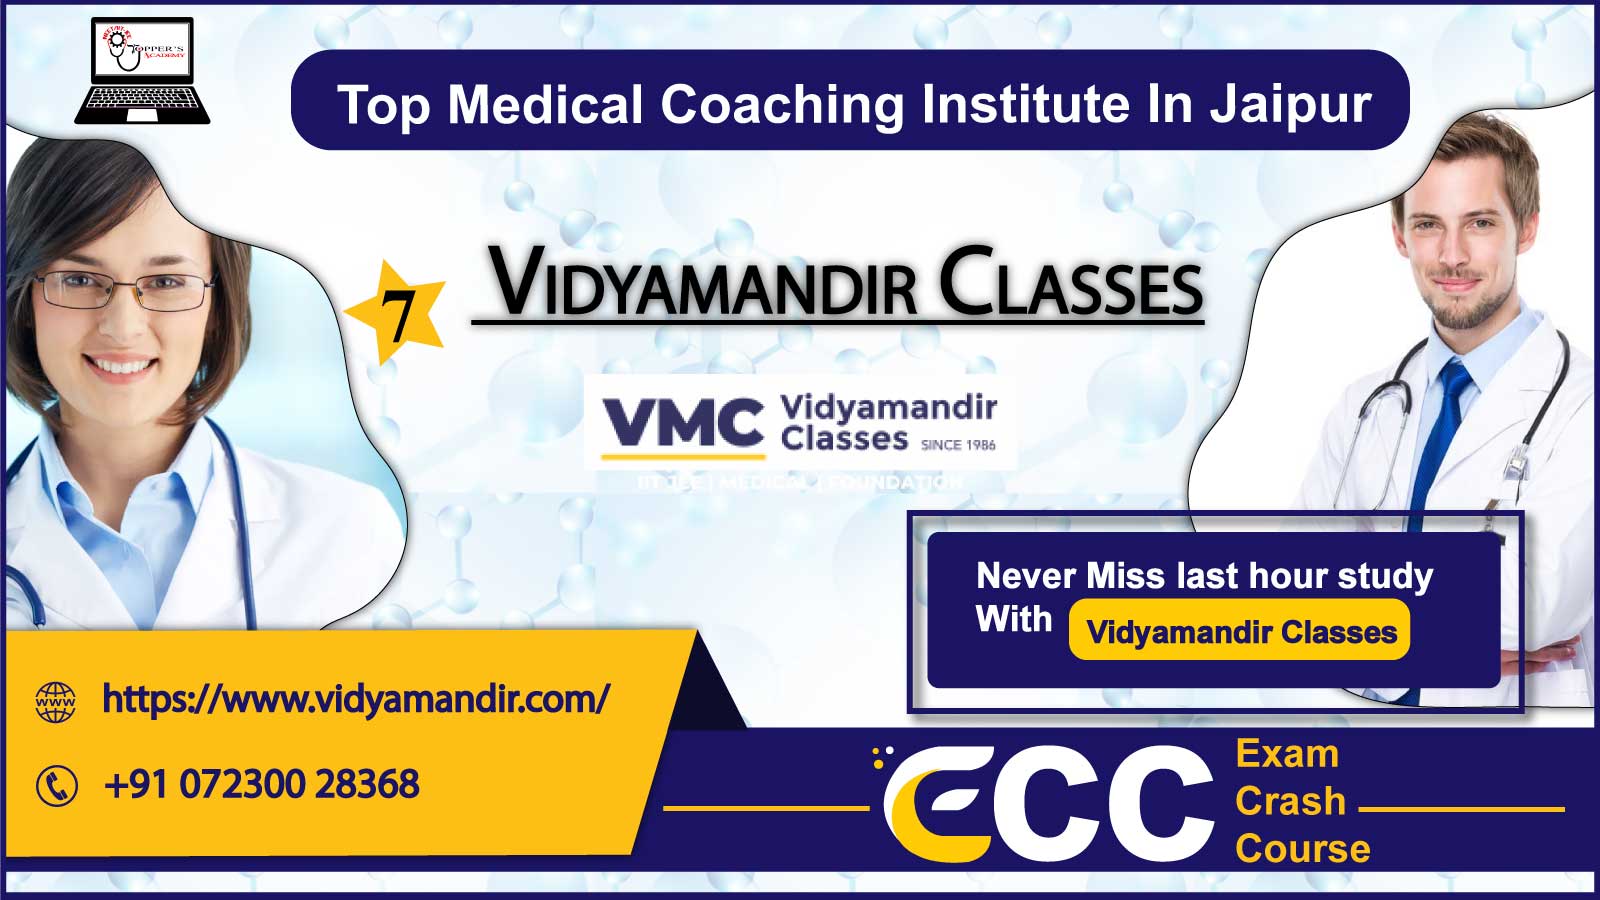 Vidyamandir Classes NEET Coaching In Jaipur